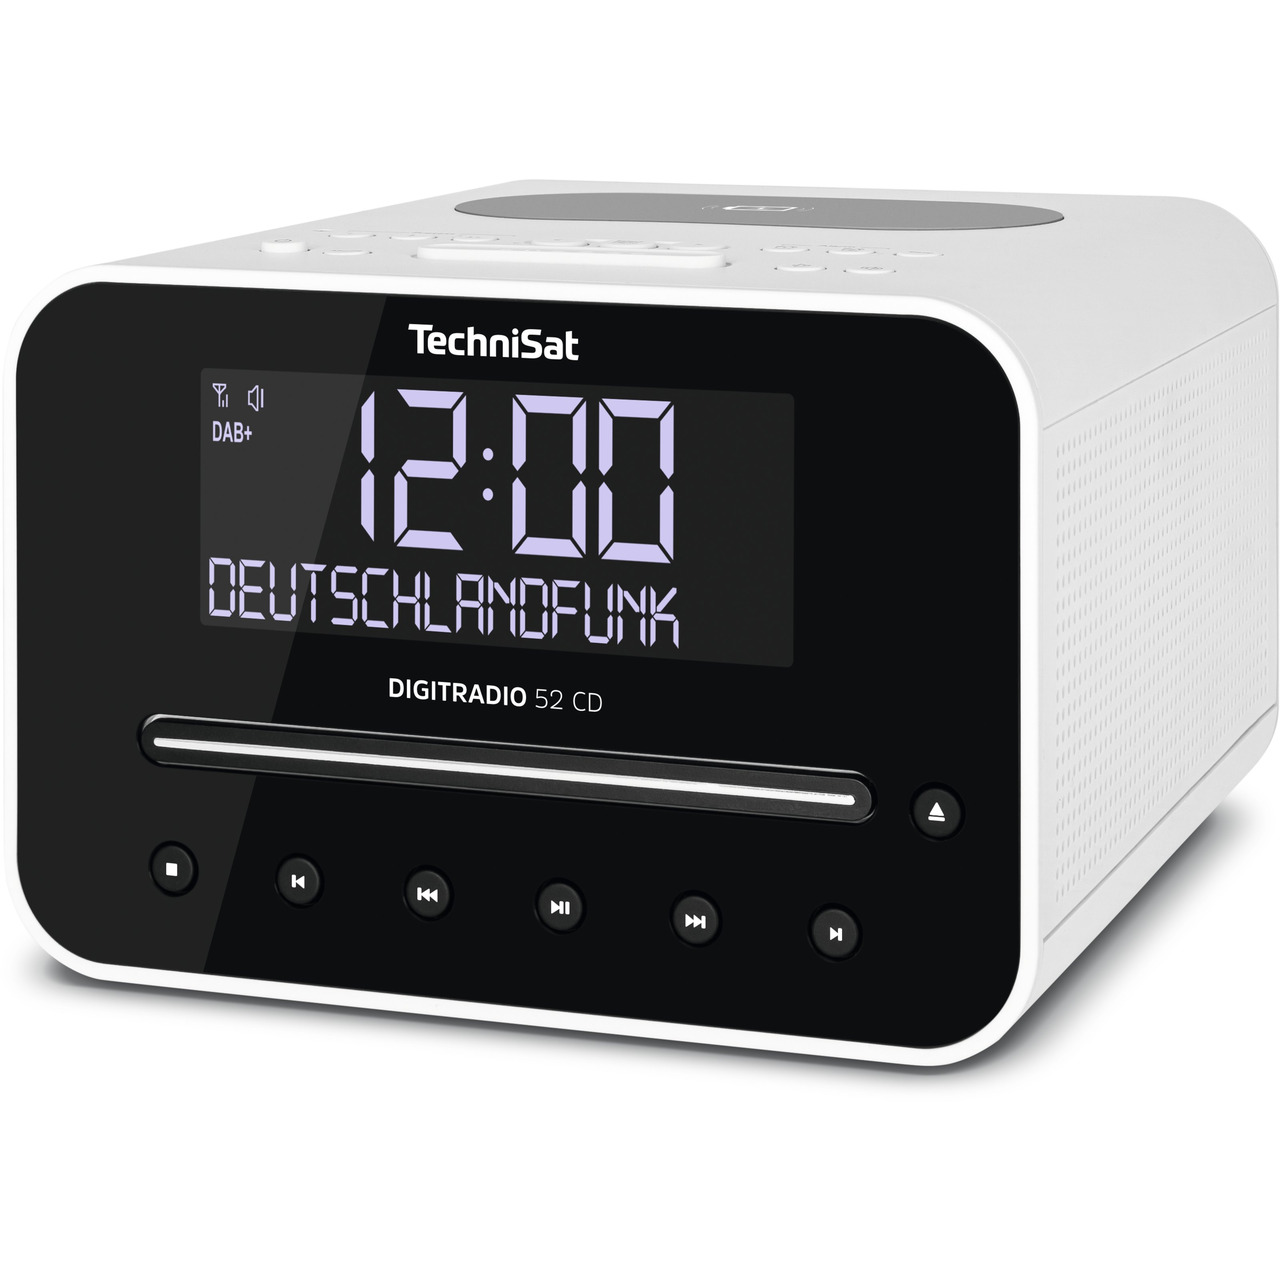 TechniSat Uhrenradio DigitRadio 52 CD- DAB+-UKW-Empfang- CD-Player- Bluetooth-Funktion- weiss unter Multimedia